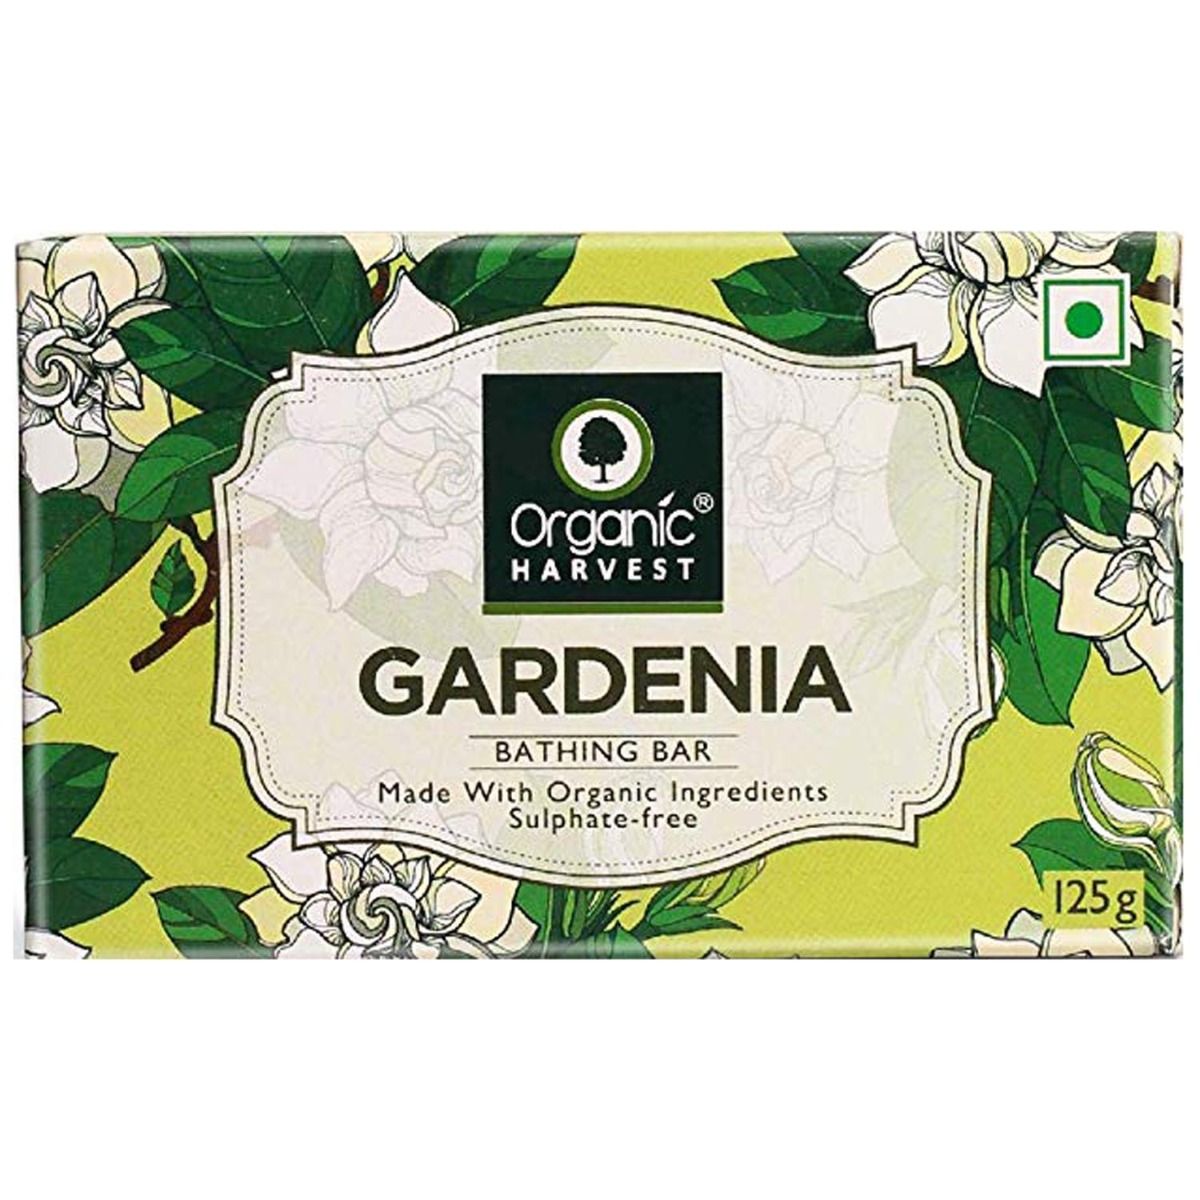 Organic Harvest Gardenia Bathing Bar, 125 gm, Pack of 1 